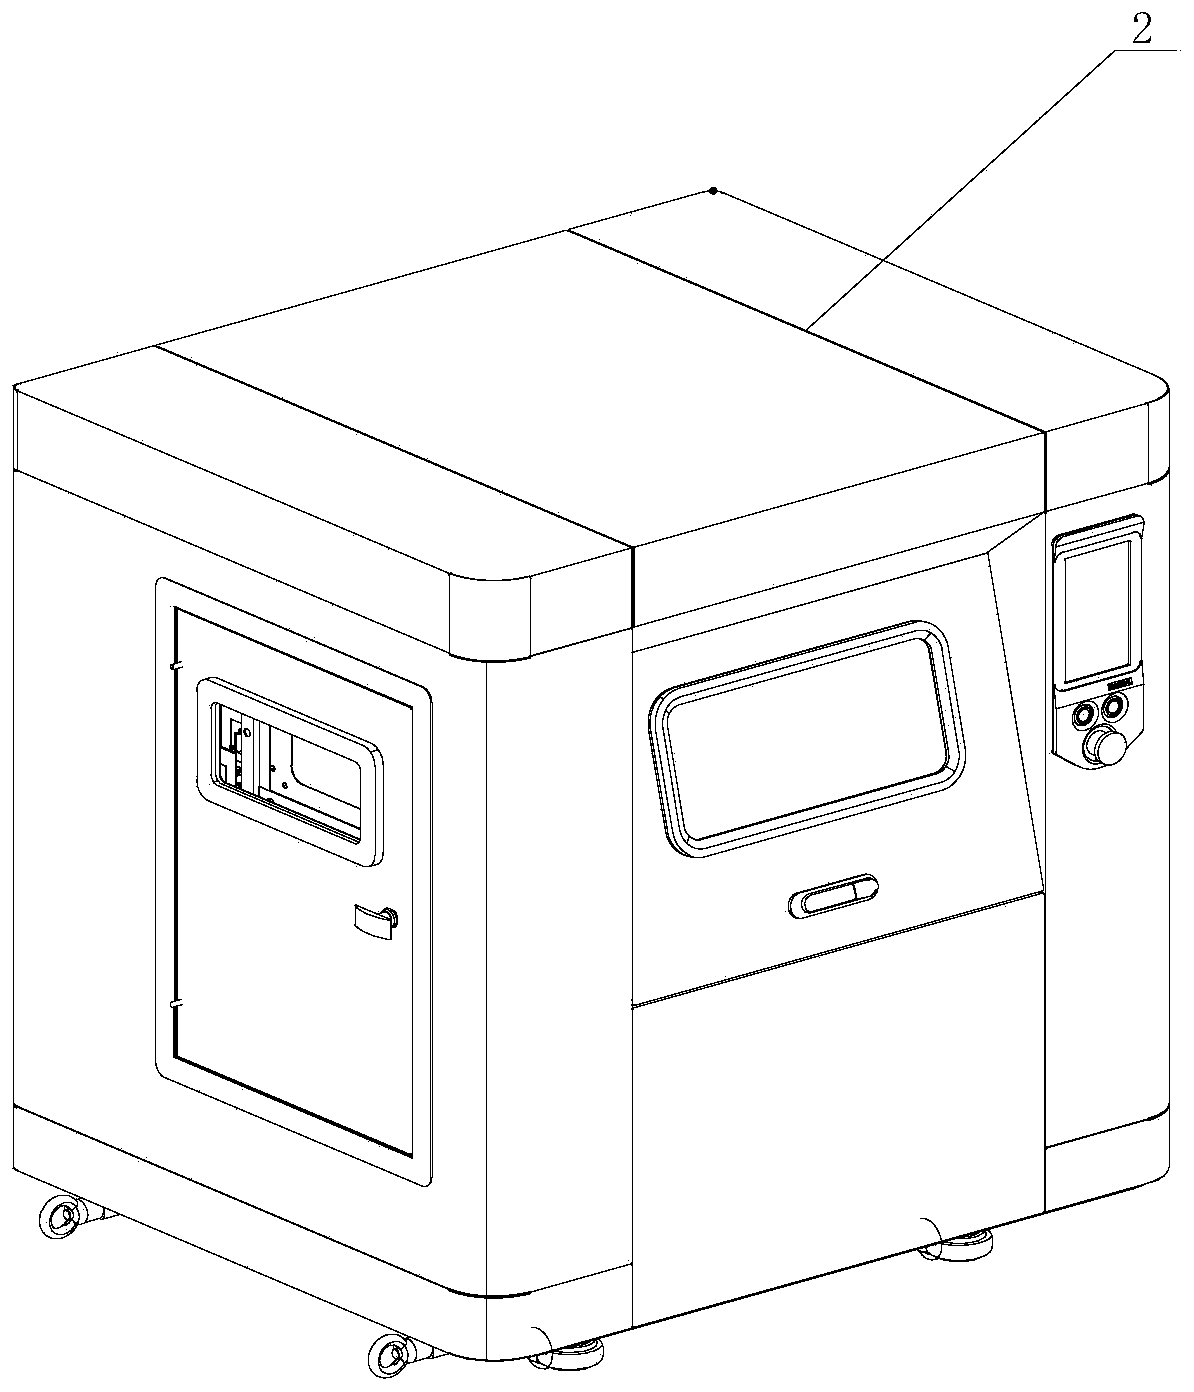 Desktop-level 3D printing equipment